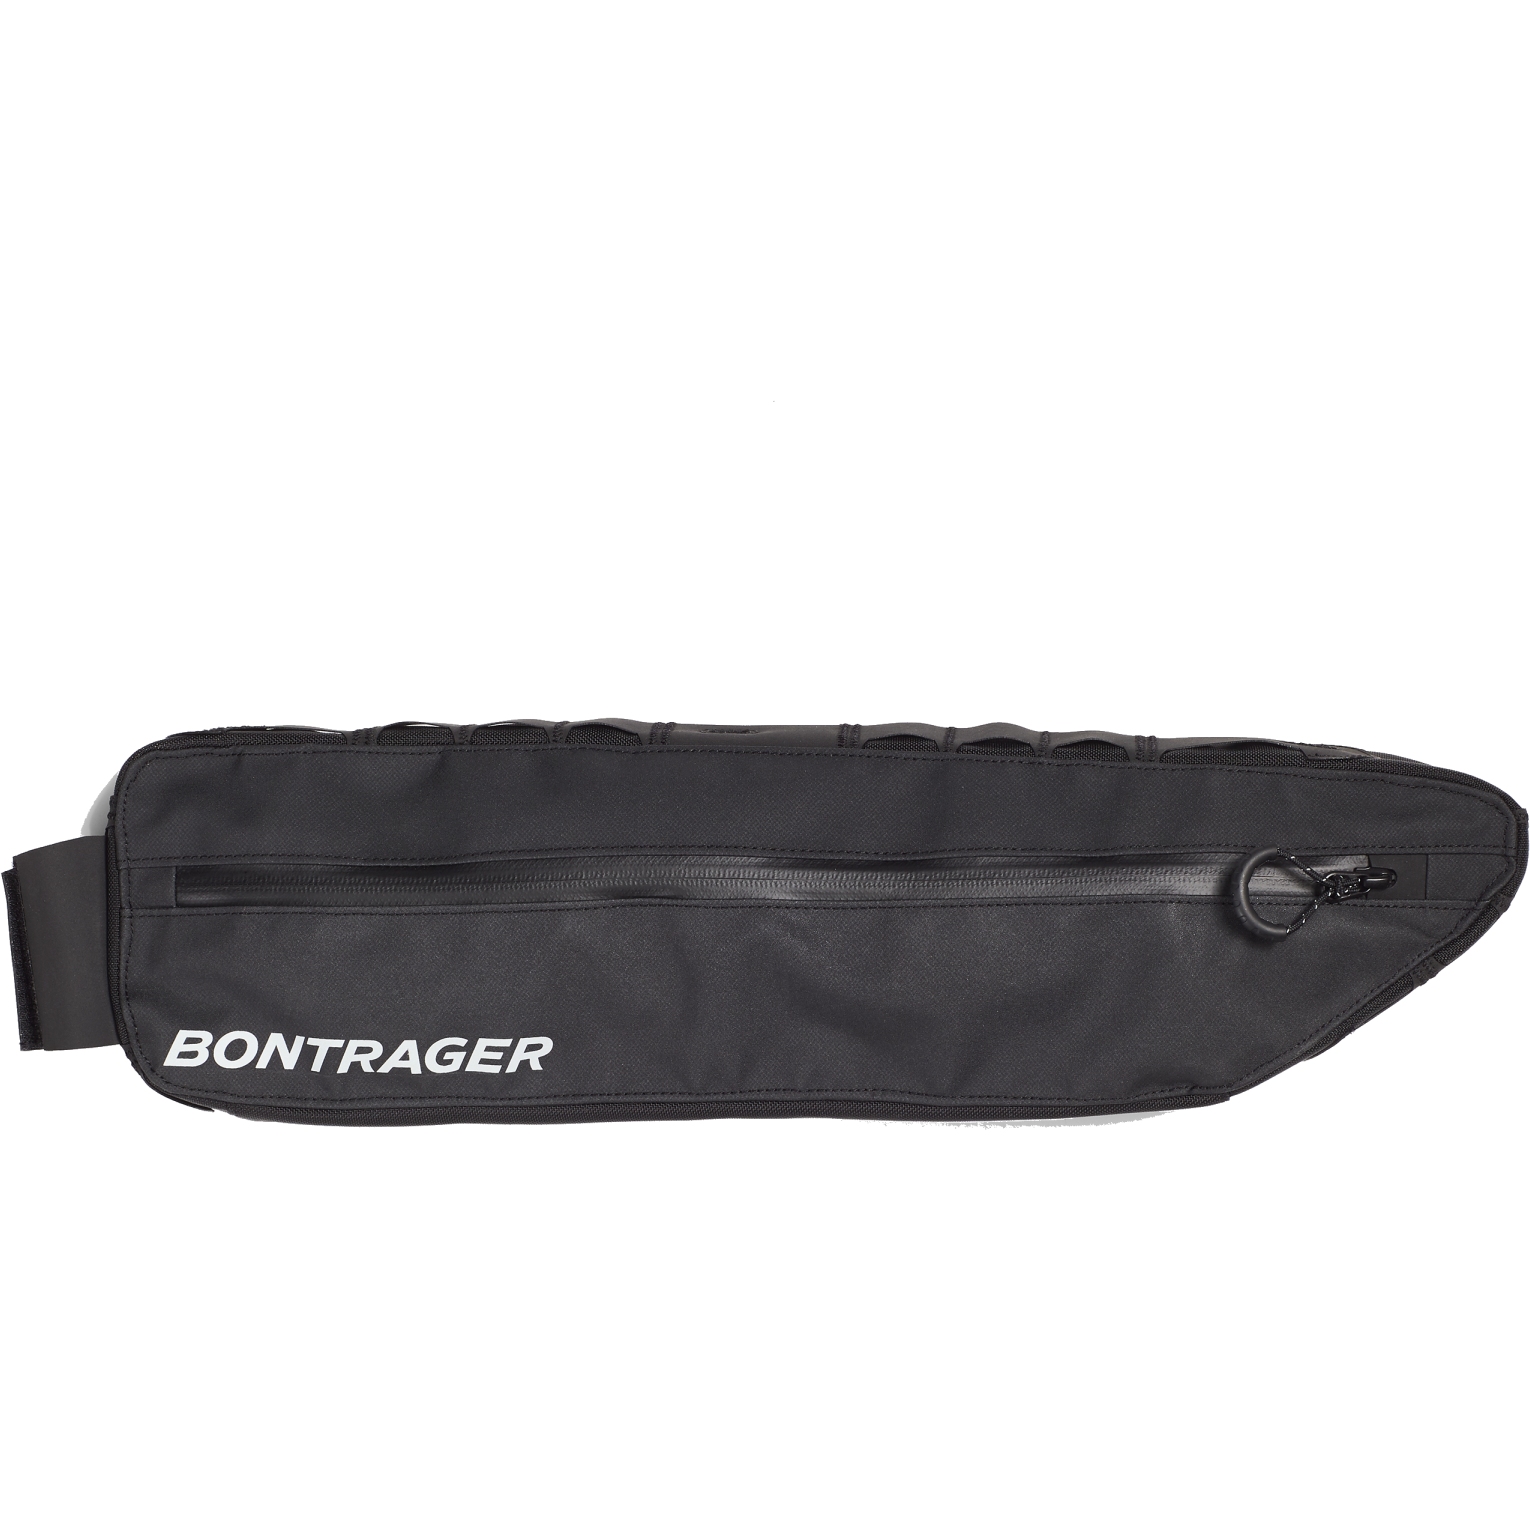 Productfoto van Bontrager Adventure Boss Frame Bag - 54cm - 2.5L